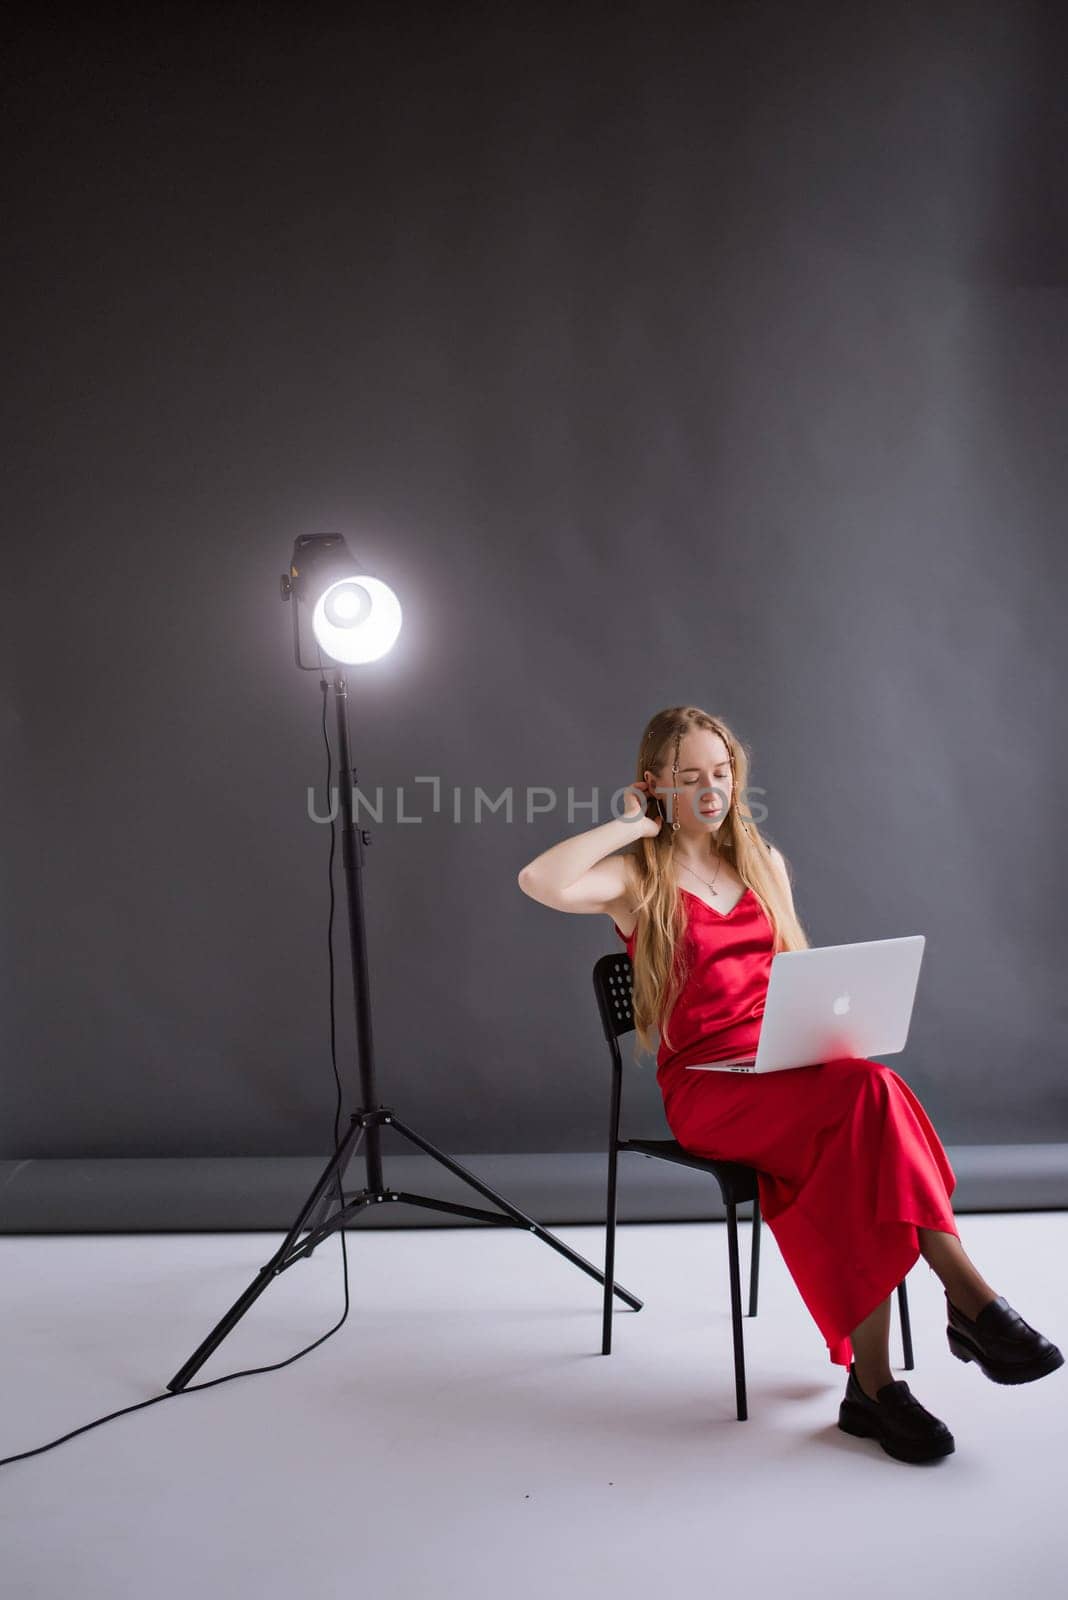 Woman blogger typing to MacBook in photo studio by OksanaFedorchuk